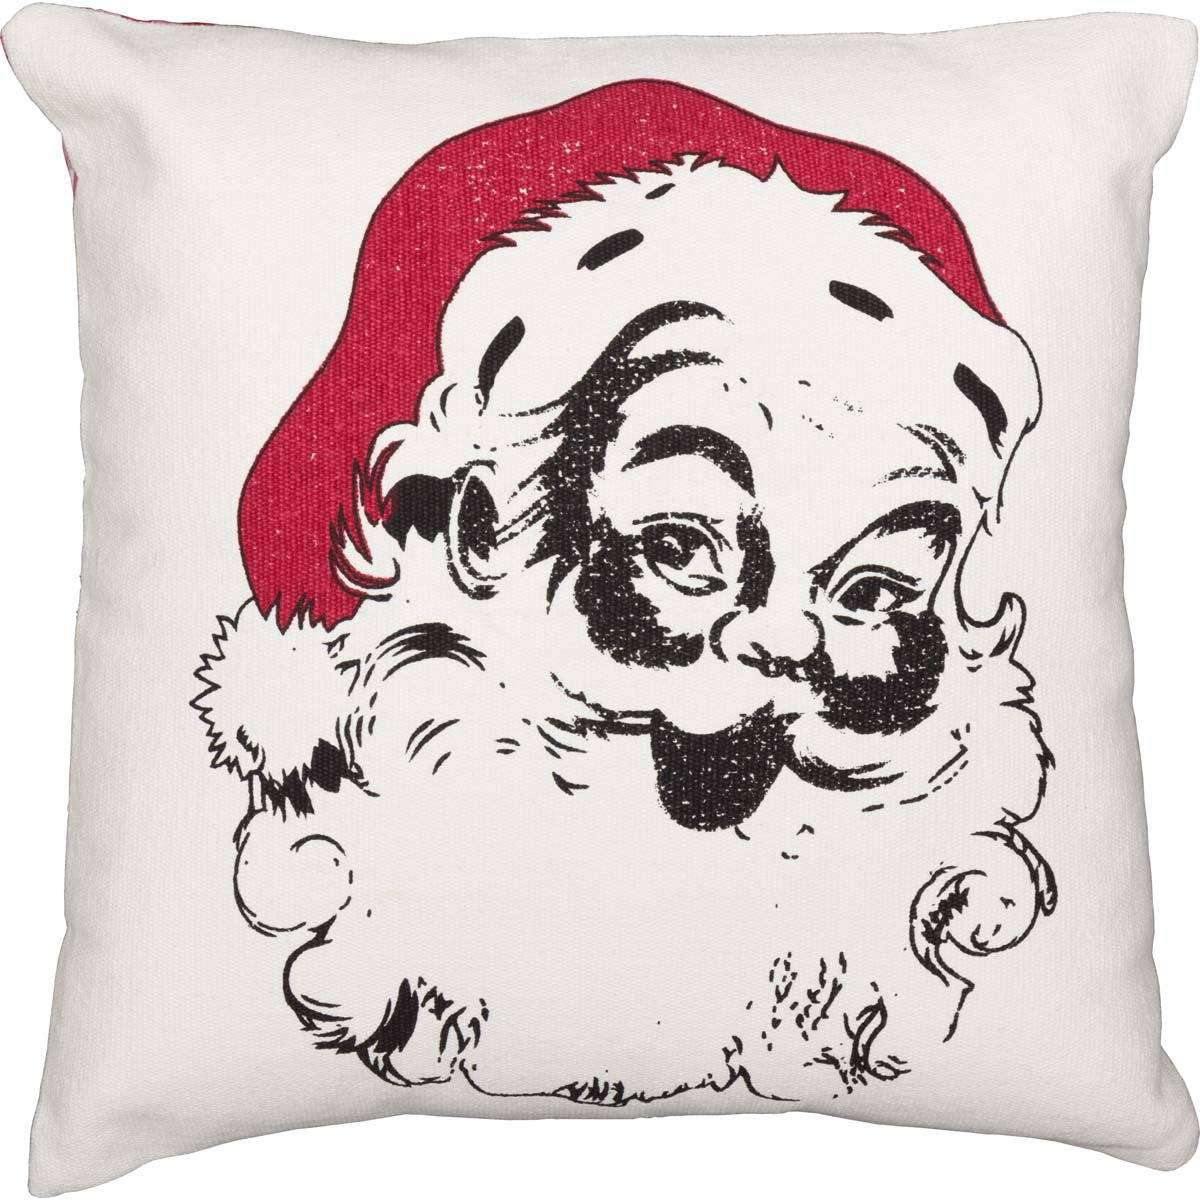 Emmie Vintage Santa Pillow 18x18 - The Fox Decor